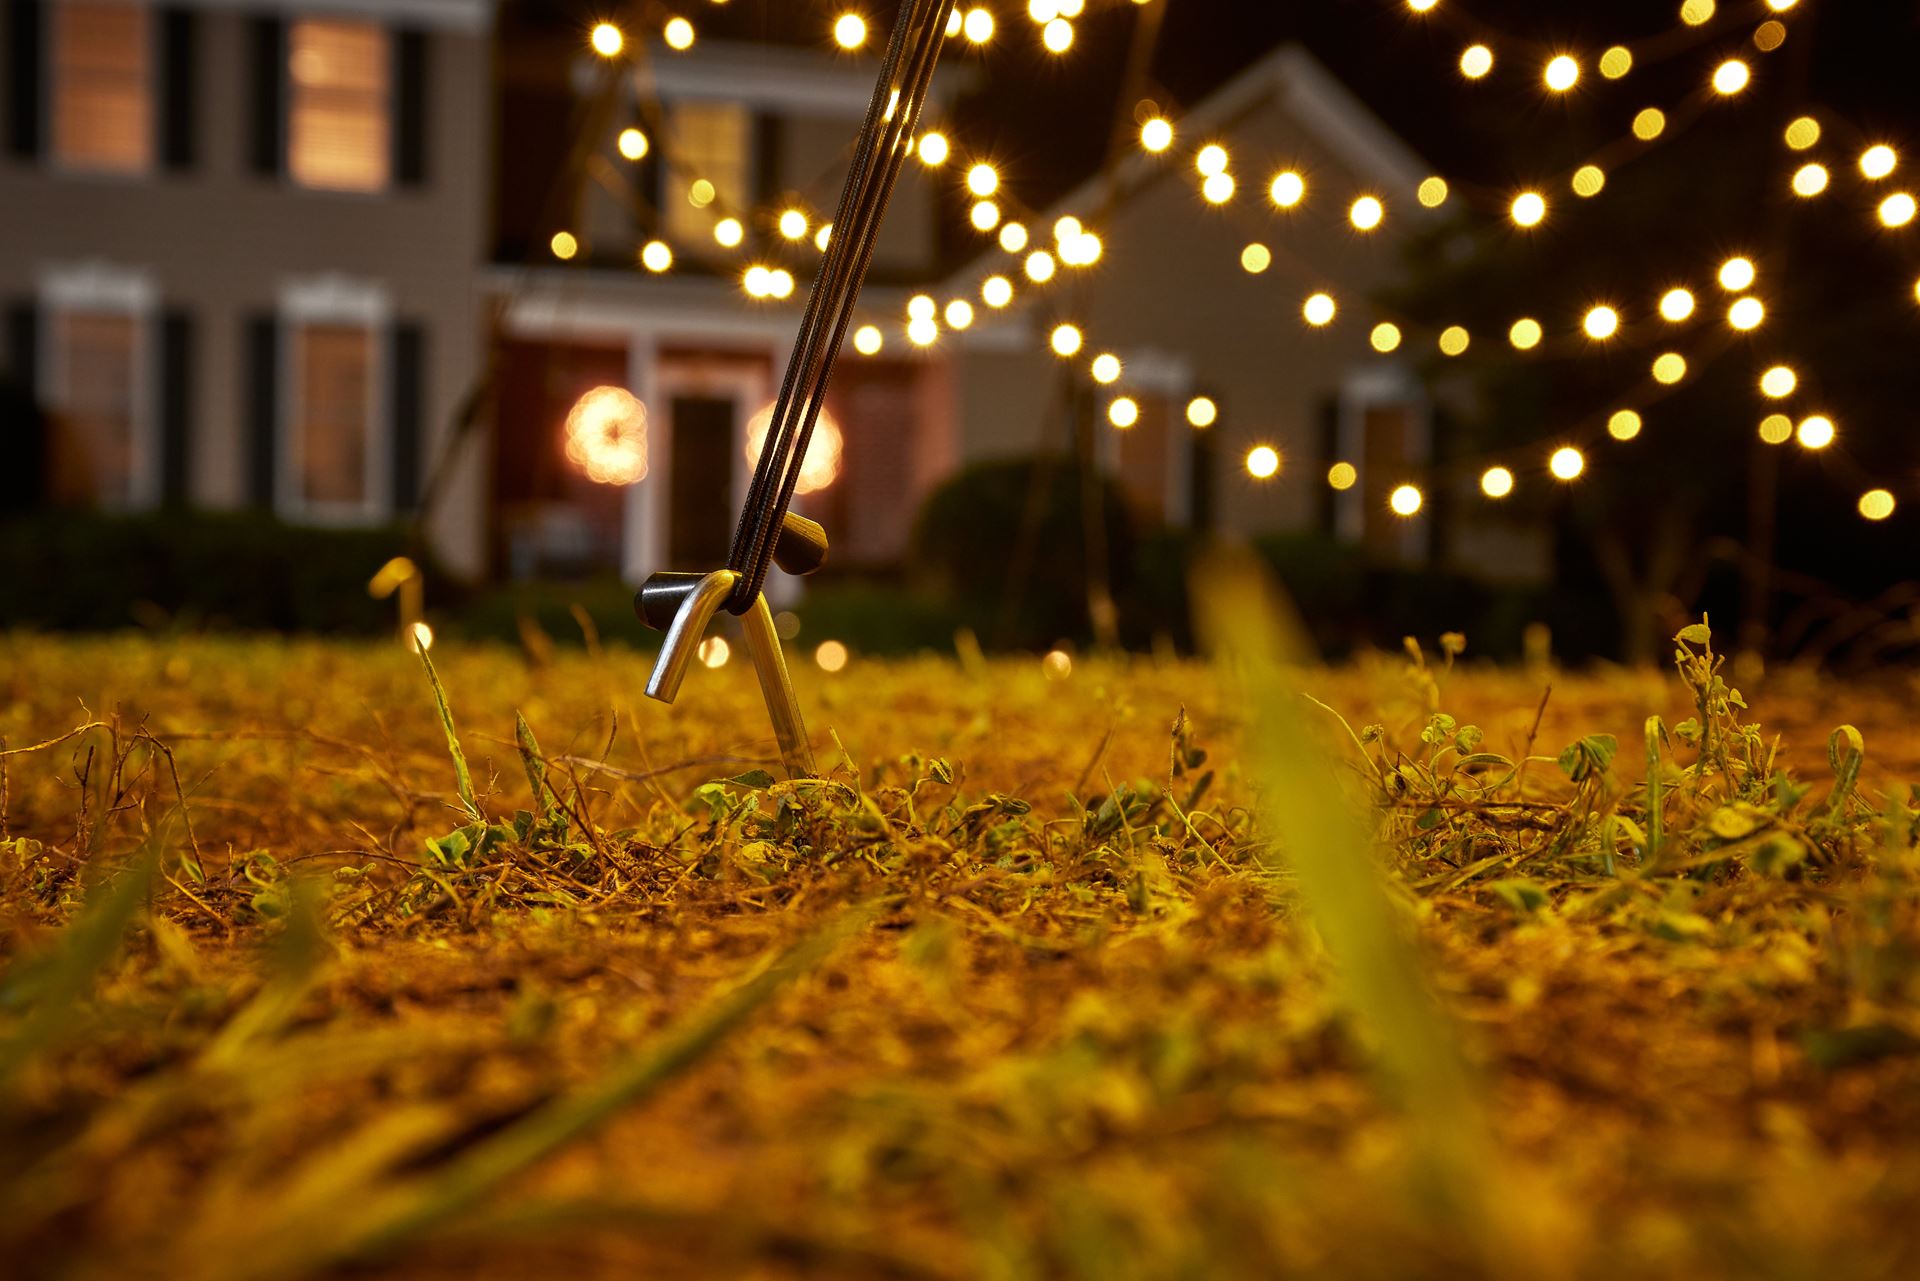 Fairybell-kerstverlichting-kerstboom-buiten-10m-hoog-2000-LED-lampjes-in-warmwitte-kleur-